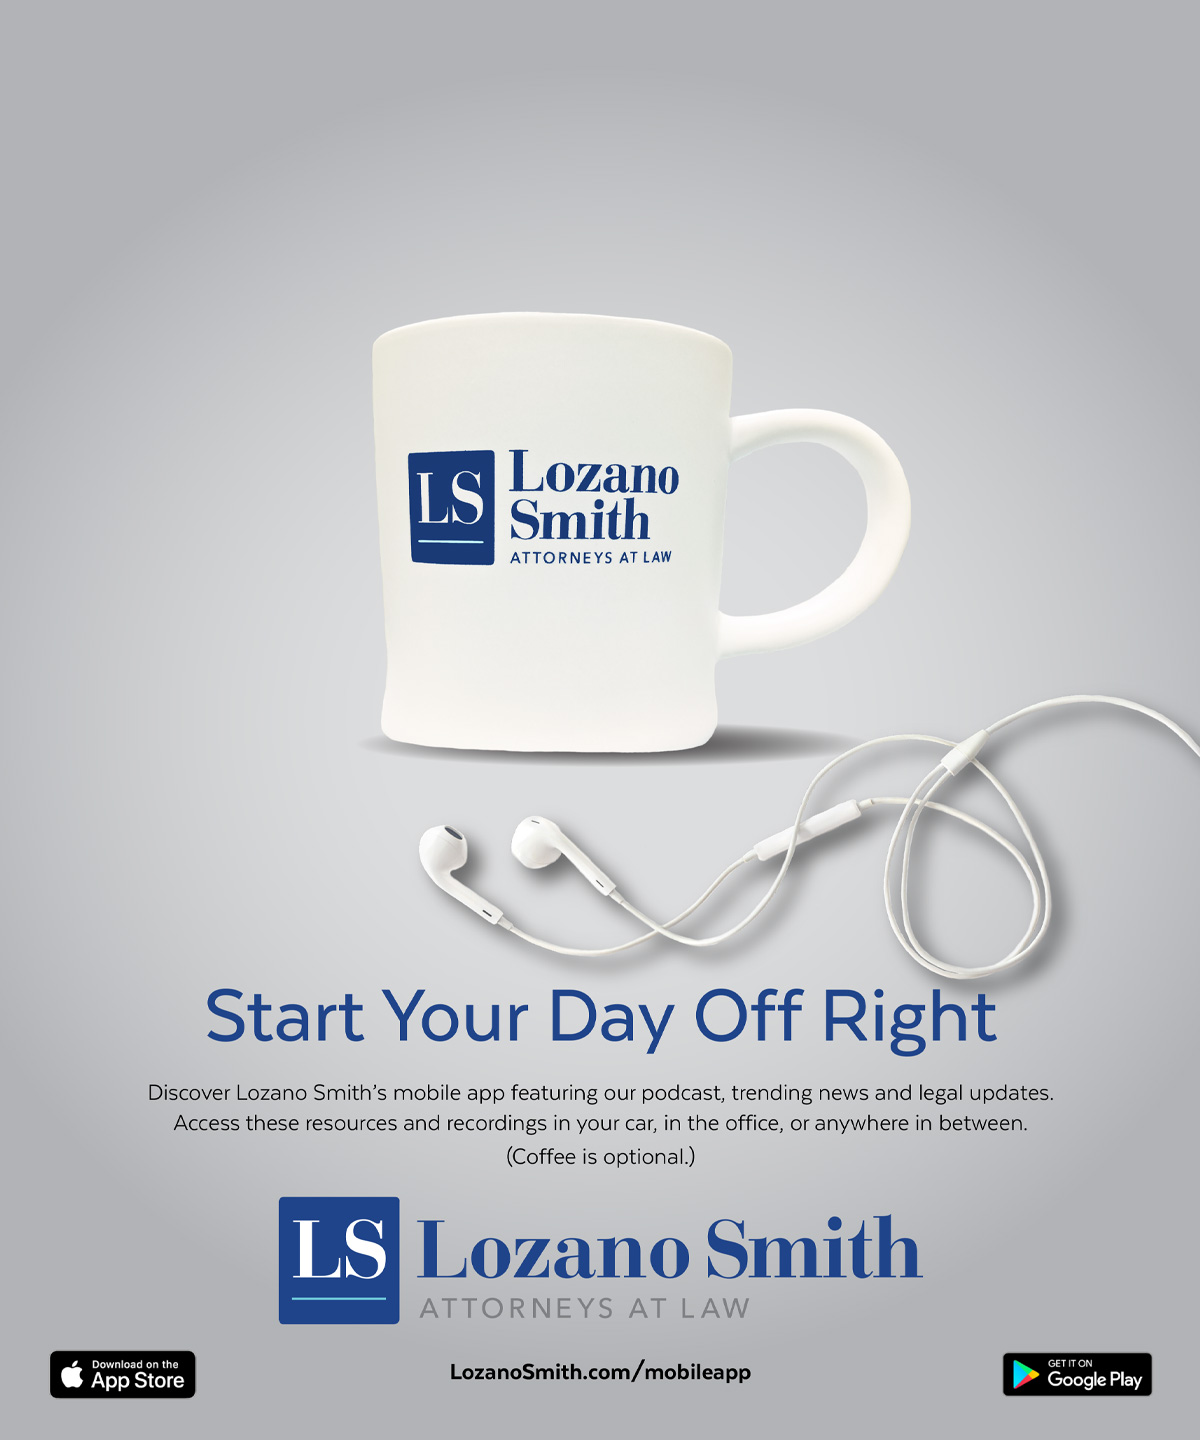 Lozano Smith Attorneys at Law Advertisement